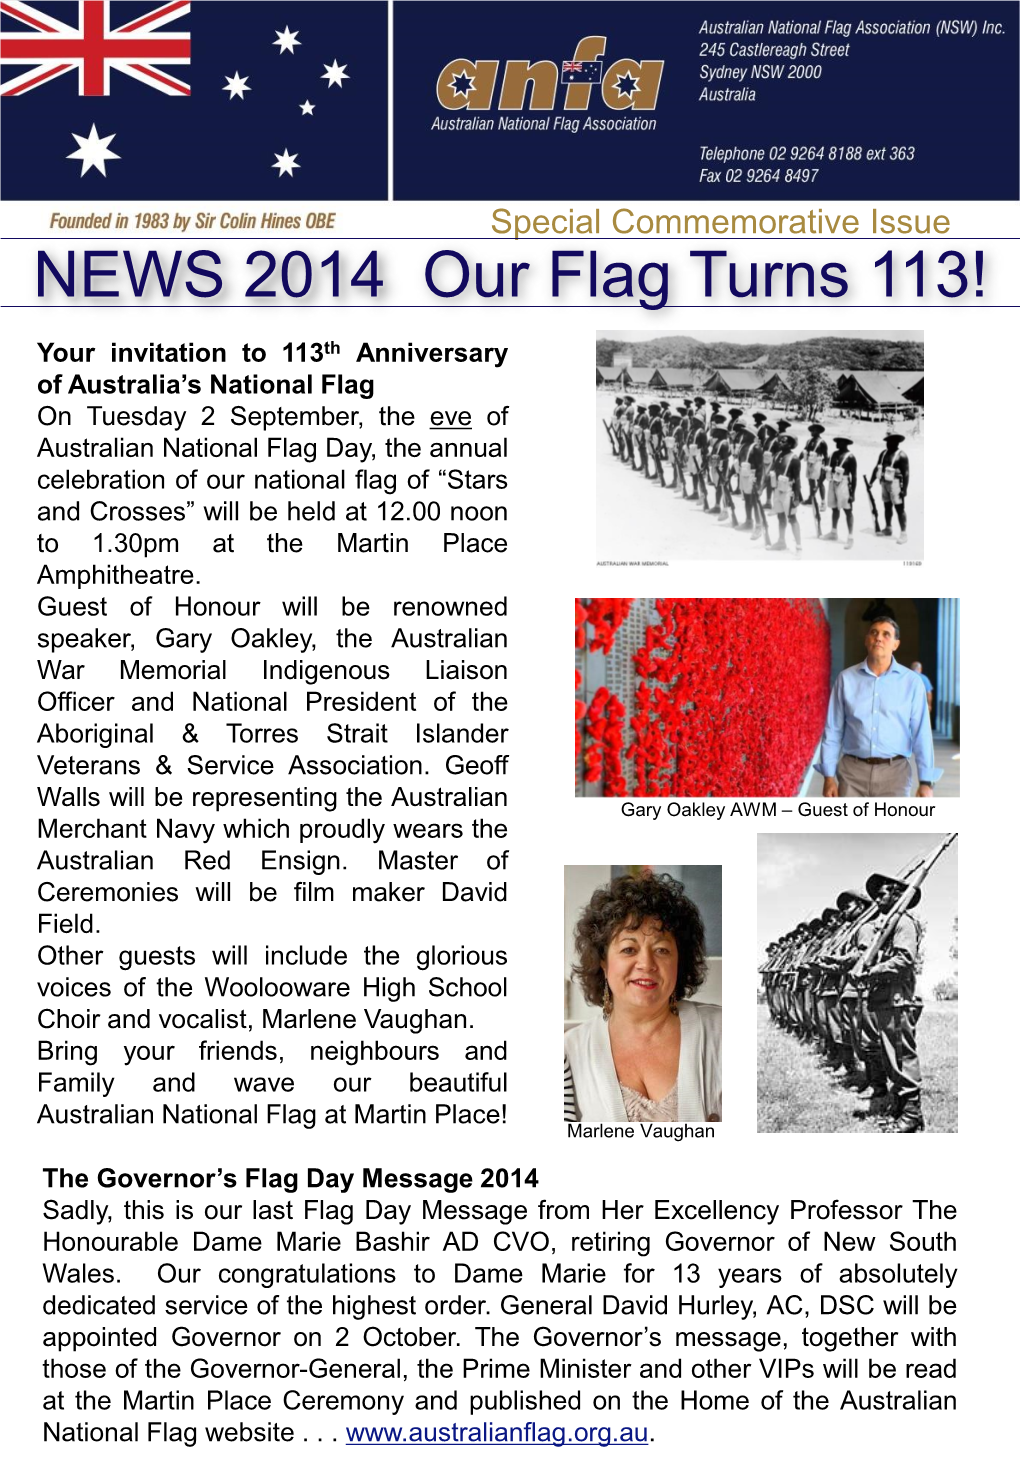 NEWS 2014 Our Flag Turns 113!